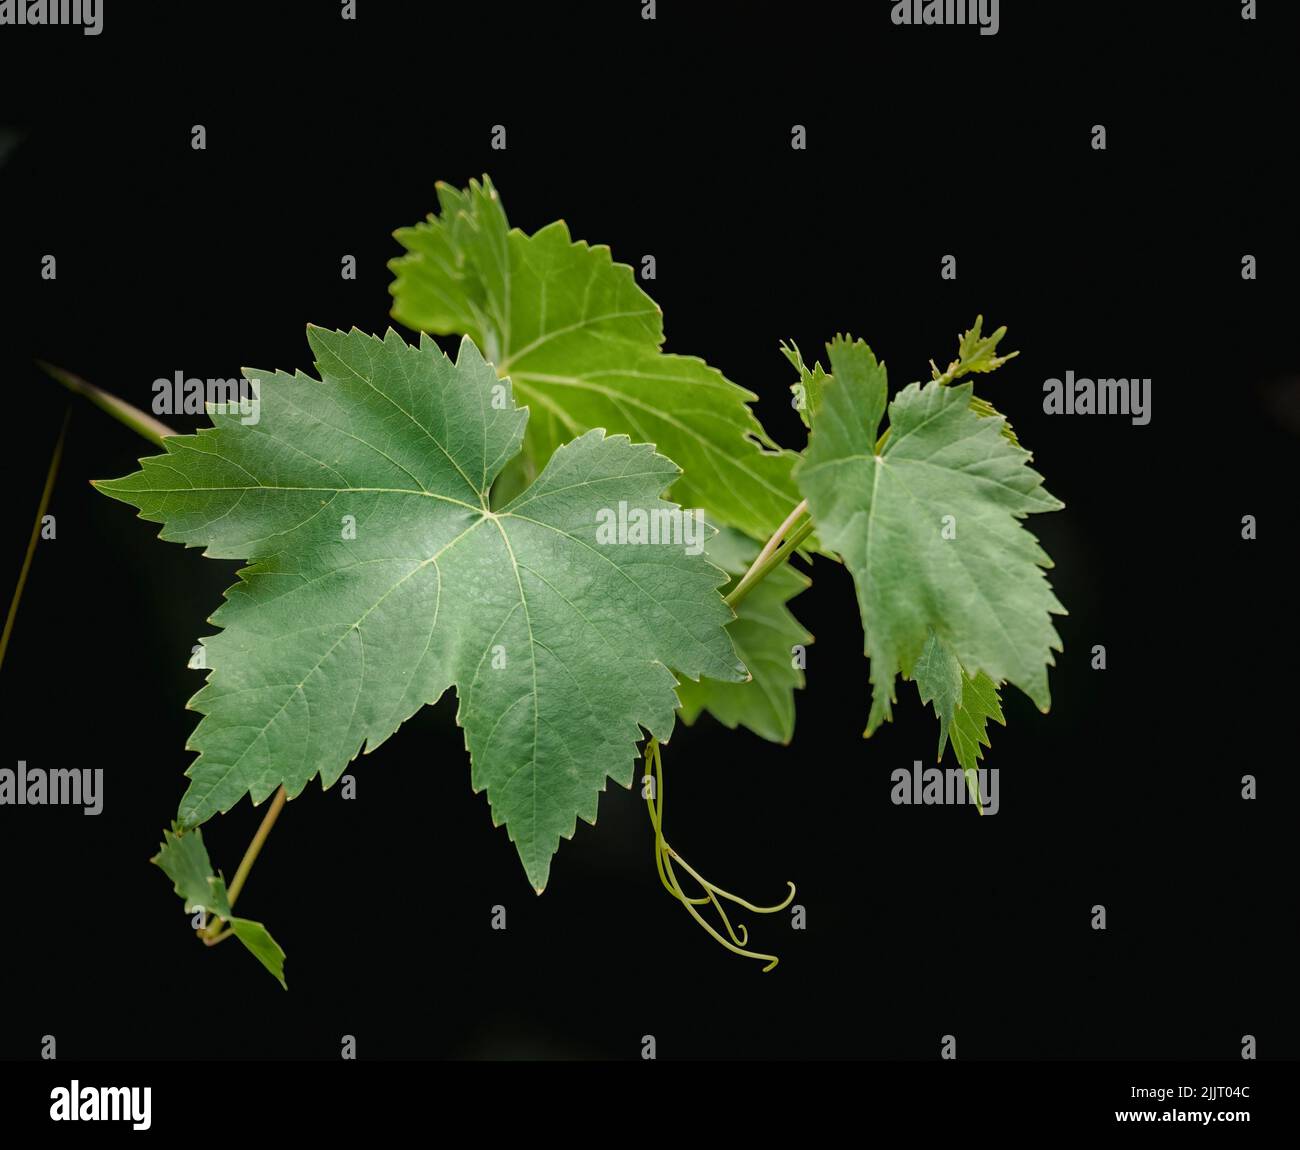 Closeup of vine leaf (Vitis vinifera) isolated against a black background Stock Photo